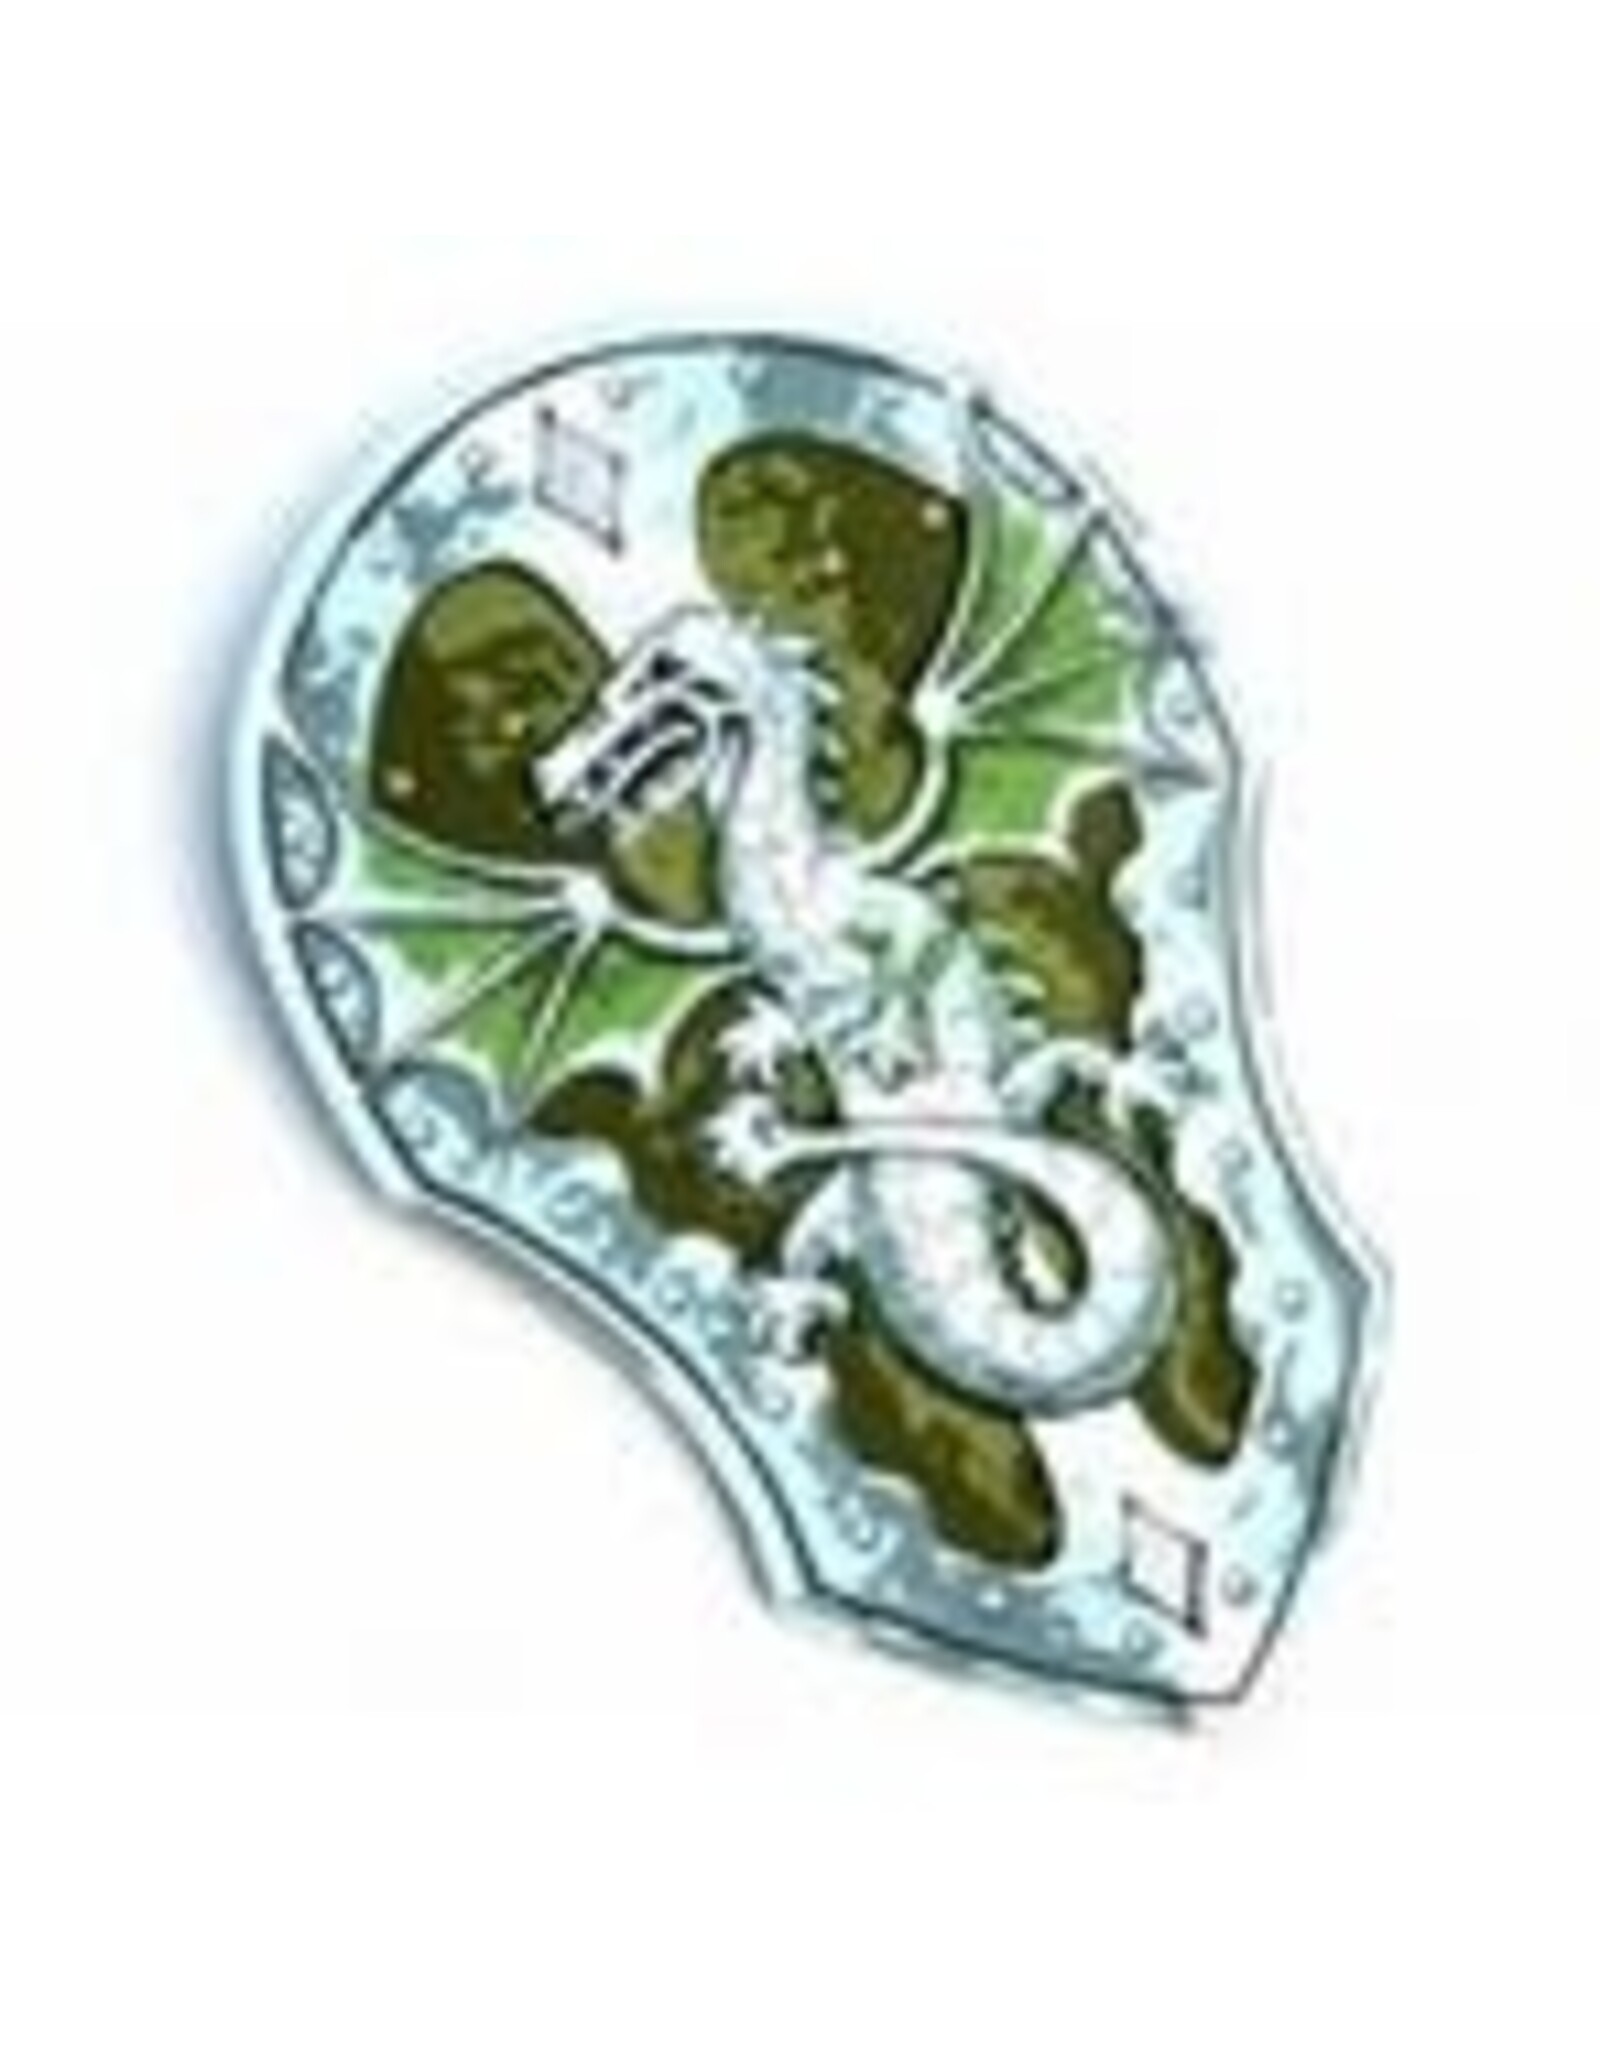 Liontouch Fantasy Shield, Dragon